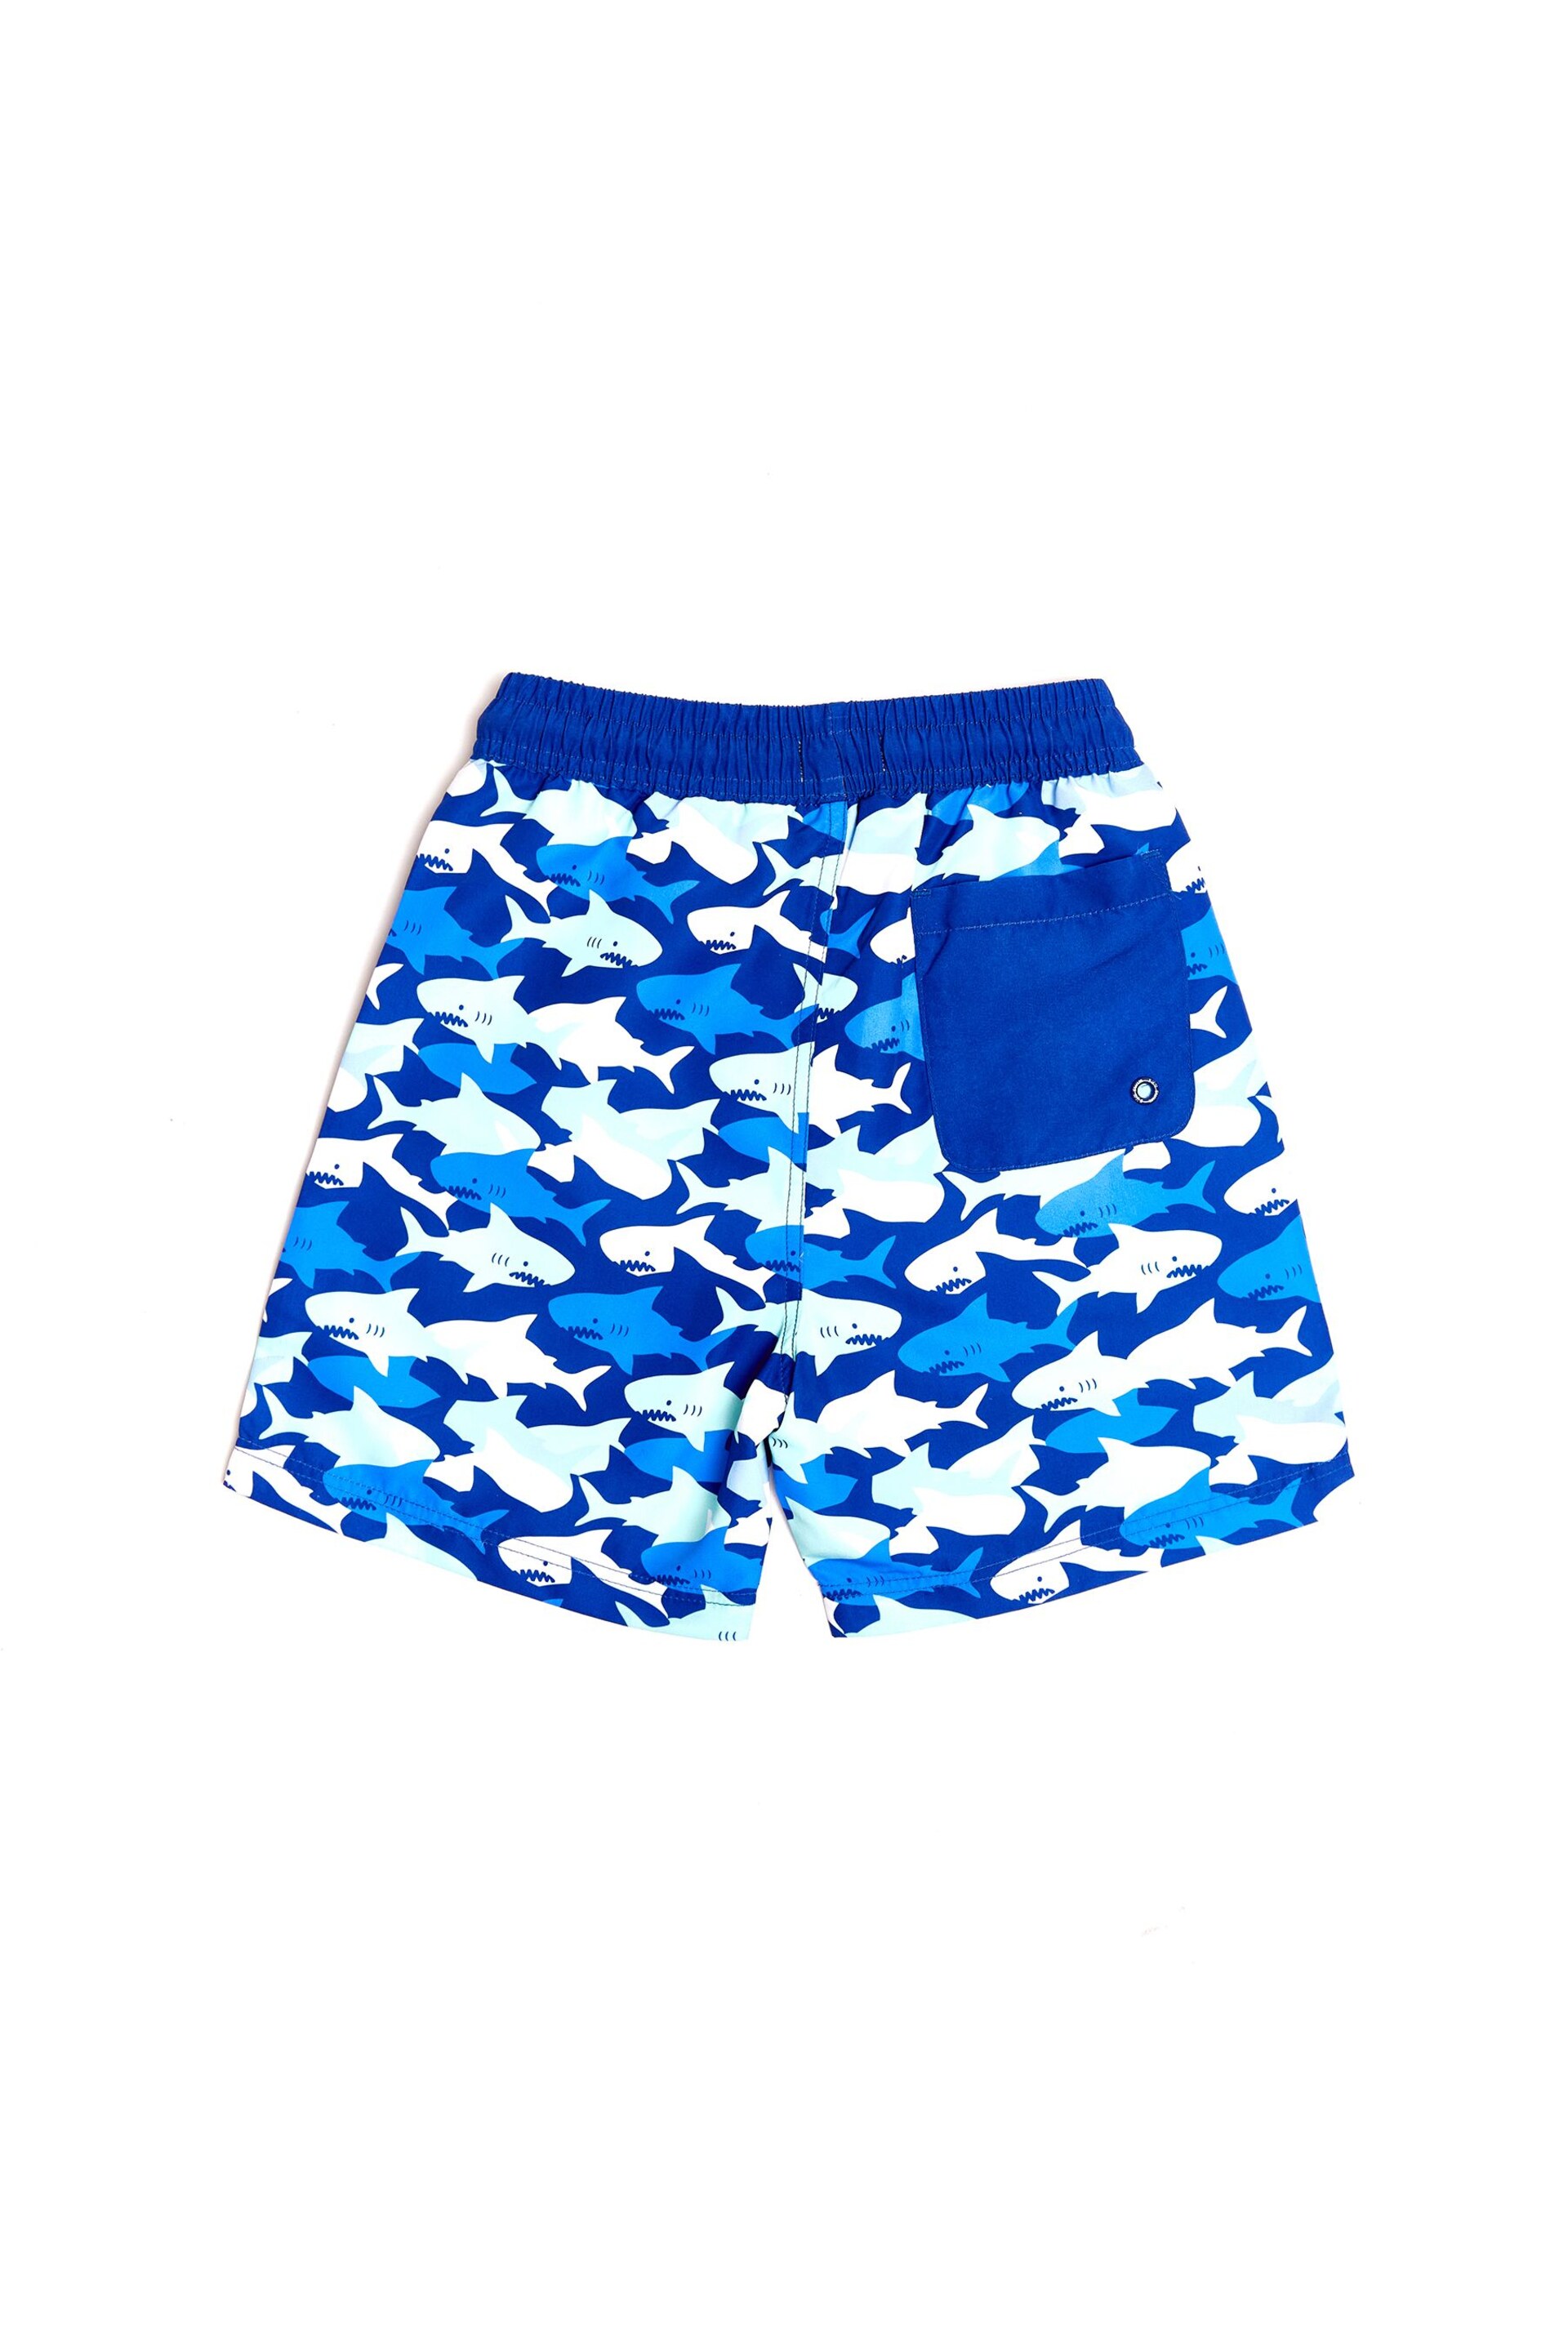 Soliswim Blue Swim Beach Shorts - Image 6 of 8